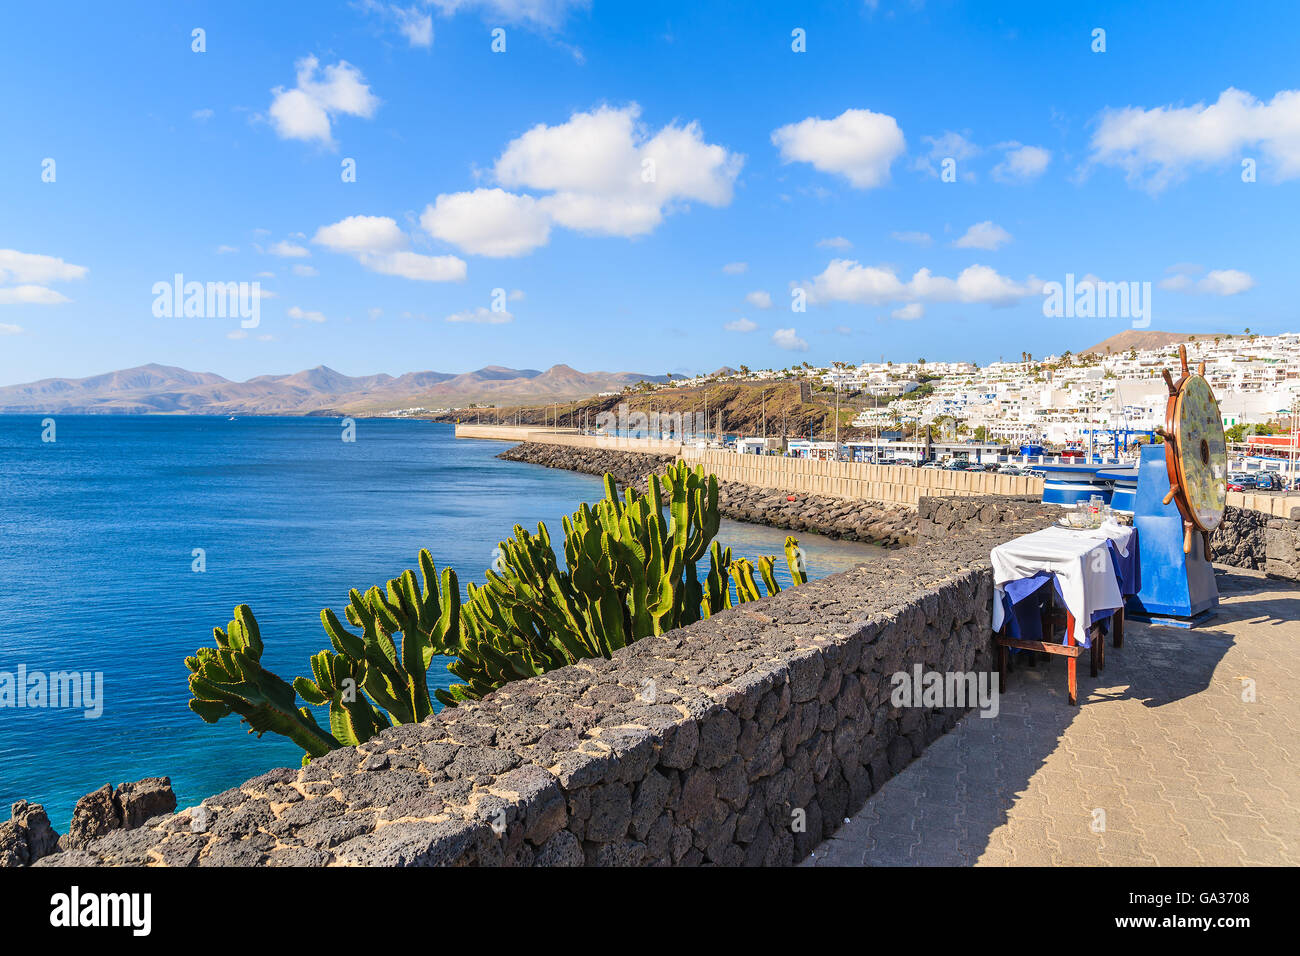 View of coast from promenade on Lanzarote island in Puerto del Carmen town, Spain Stock Photo